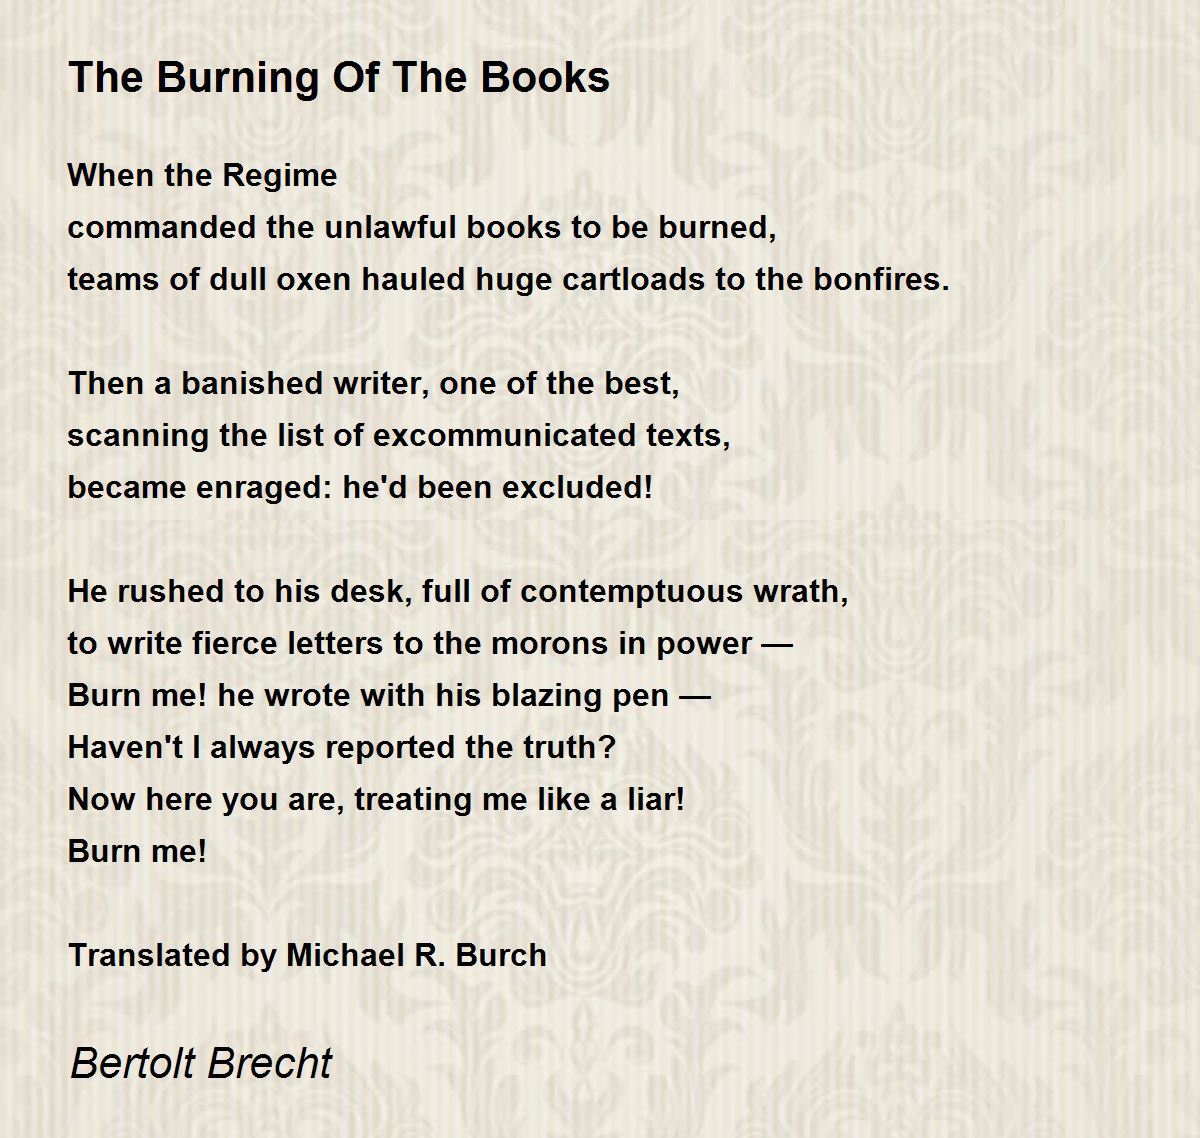 The Burning Of The Books Poem by Bertolt Brecht - Poem Hunter